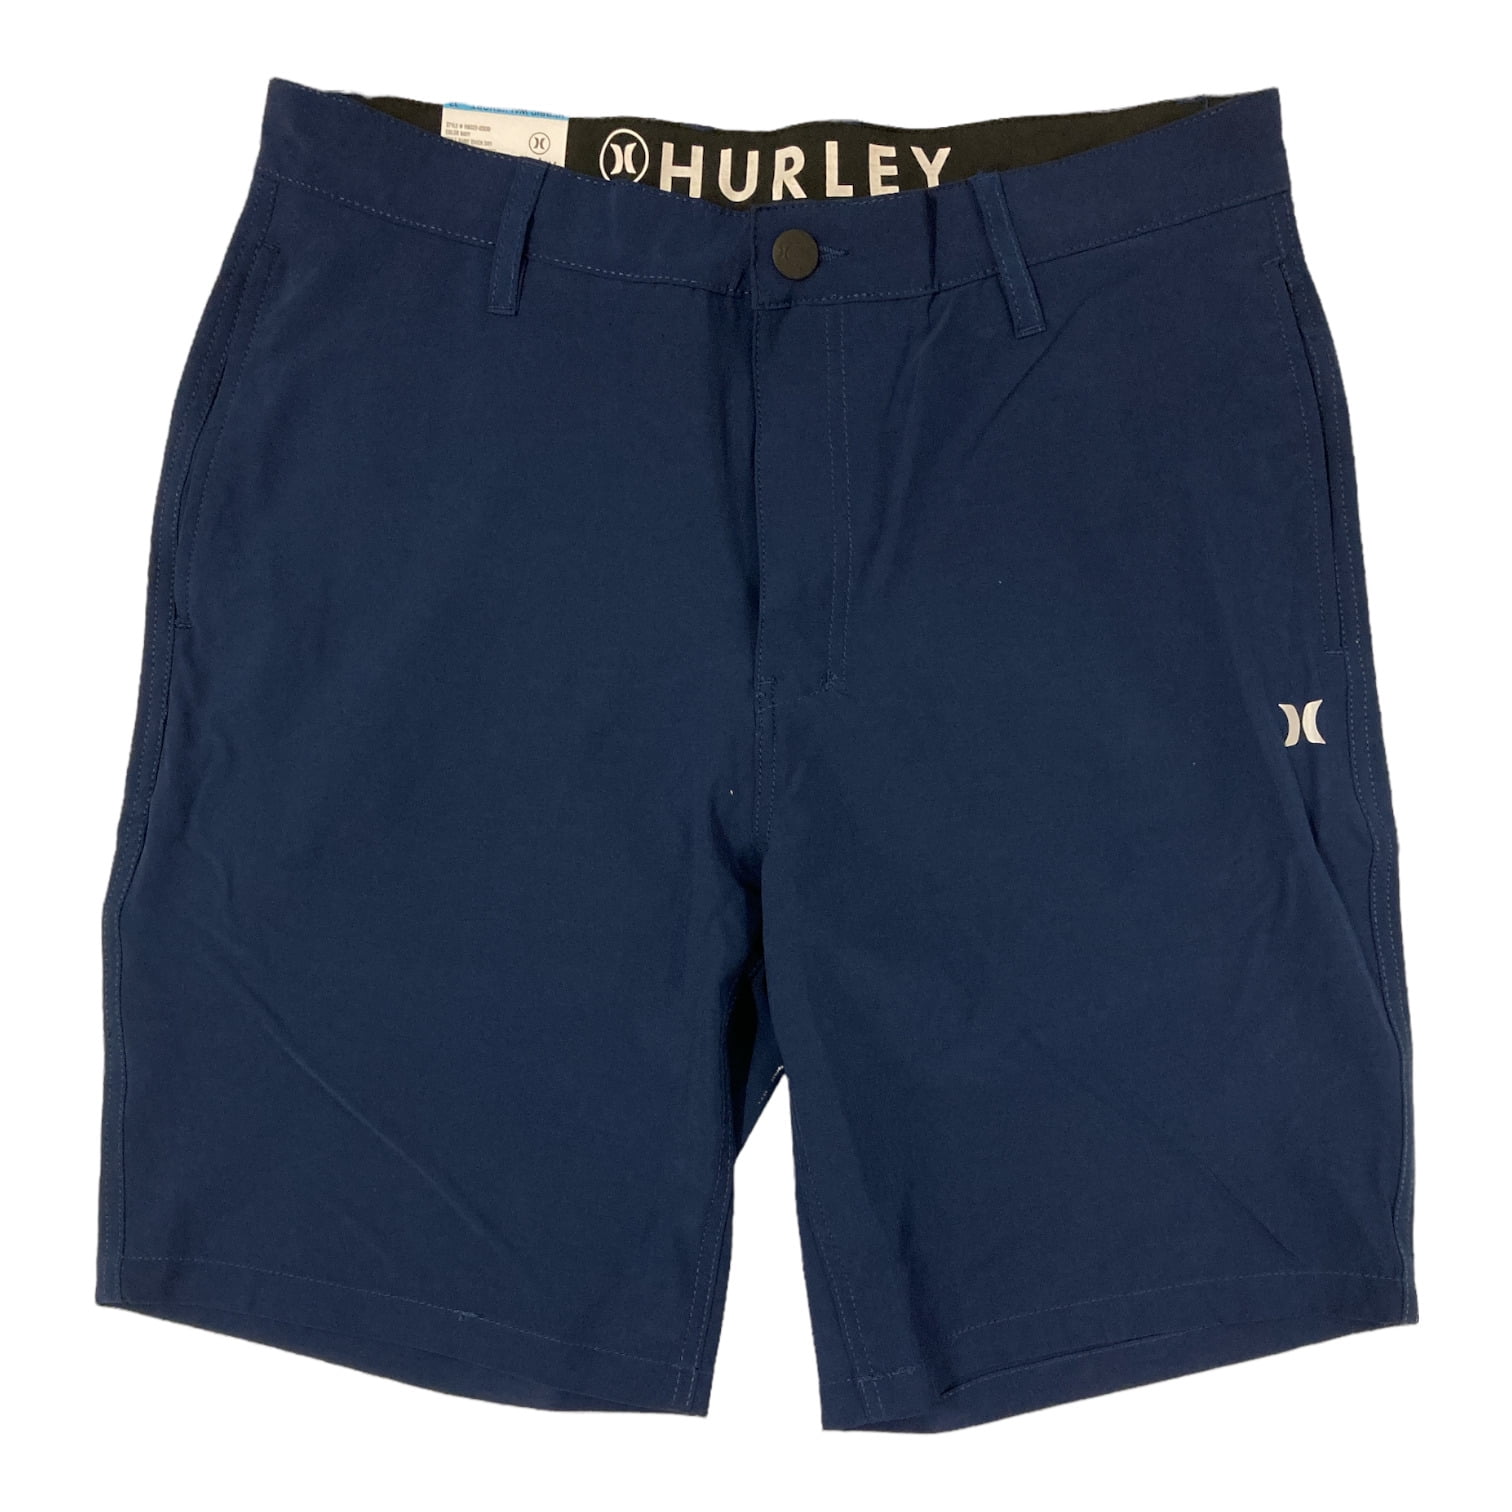 Doodt Trekker dreigen Hurley Men's Quick Dry Classic Fit Hybrid Walk Shorts (Black, 32) -  Walmart.com